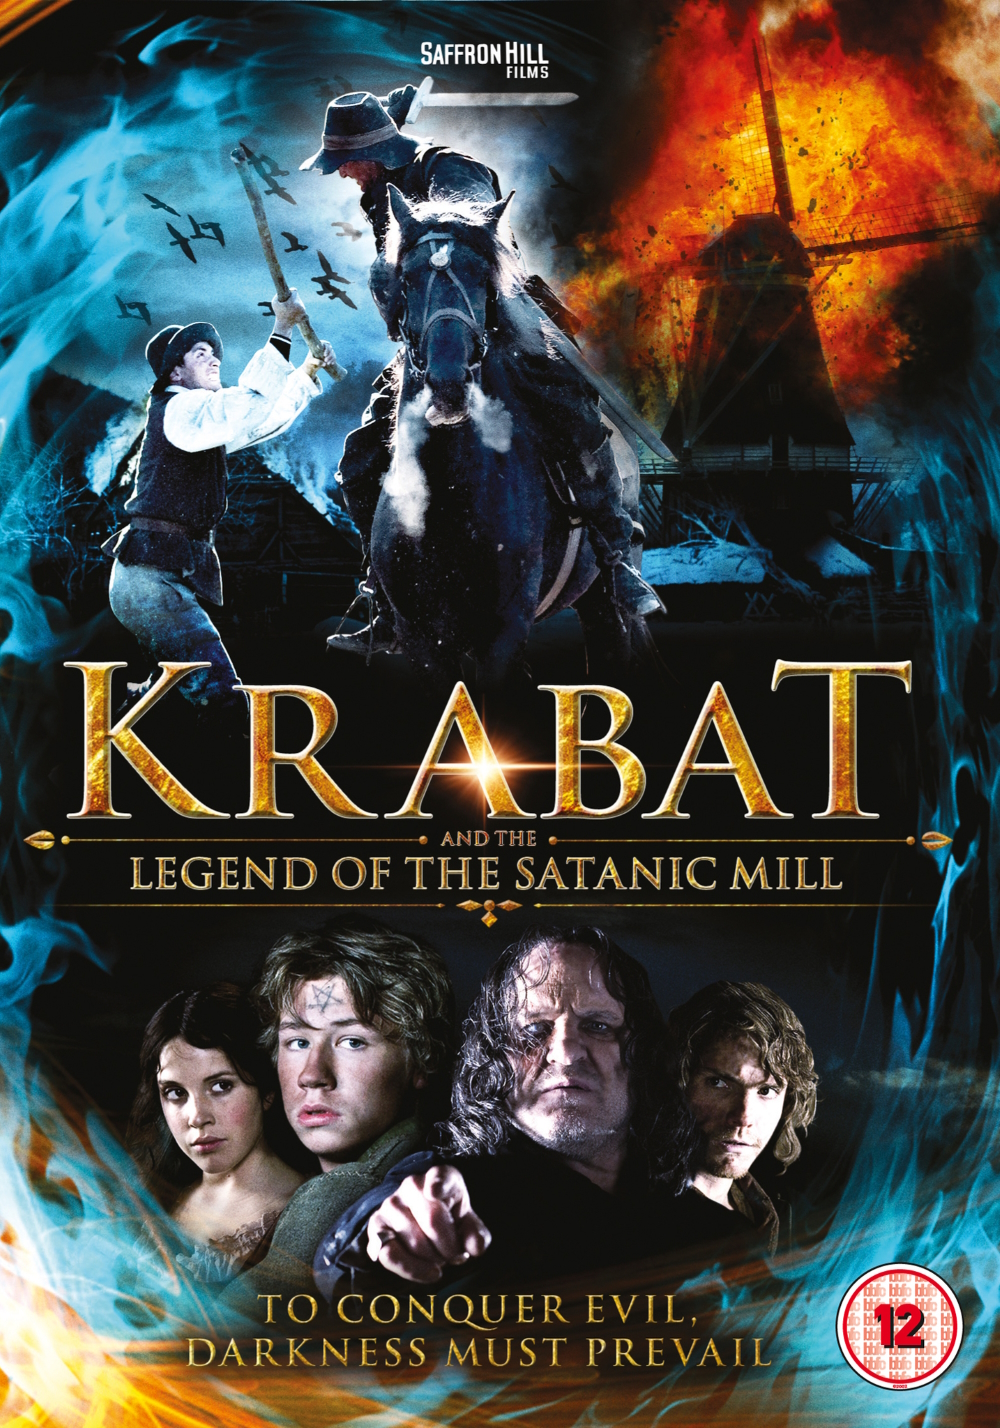 'Krabat and the Legend of the Satanic Mill': film adapation of Ottfried Preussler's fantasy novel